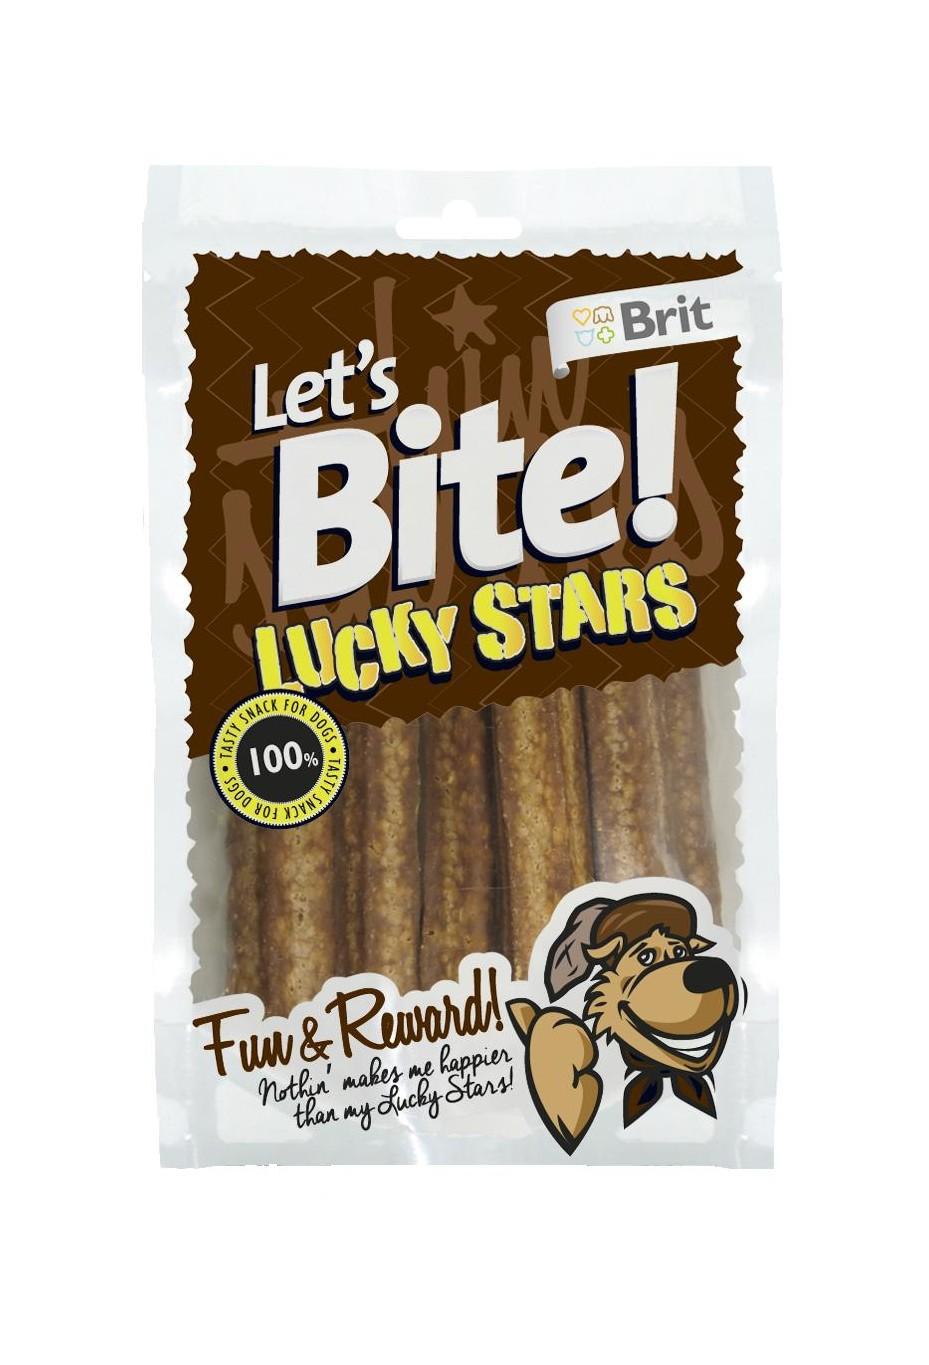 BRIT let's dog LUCKY STARS